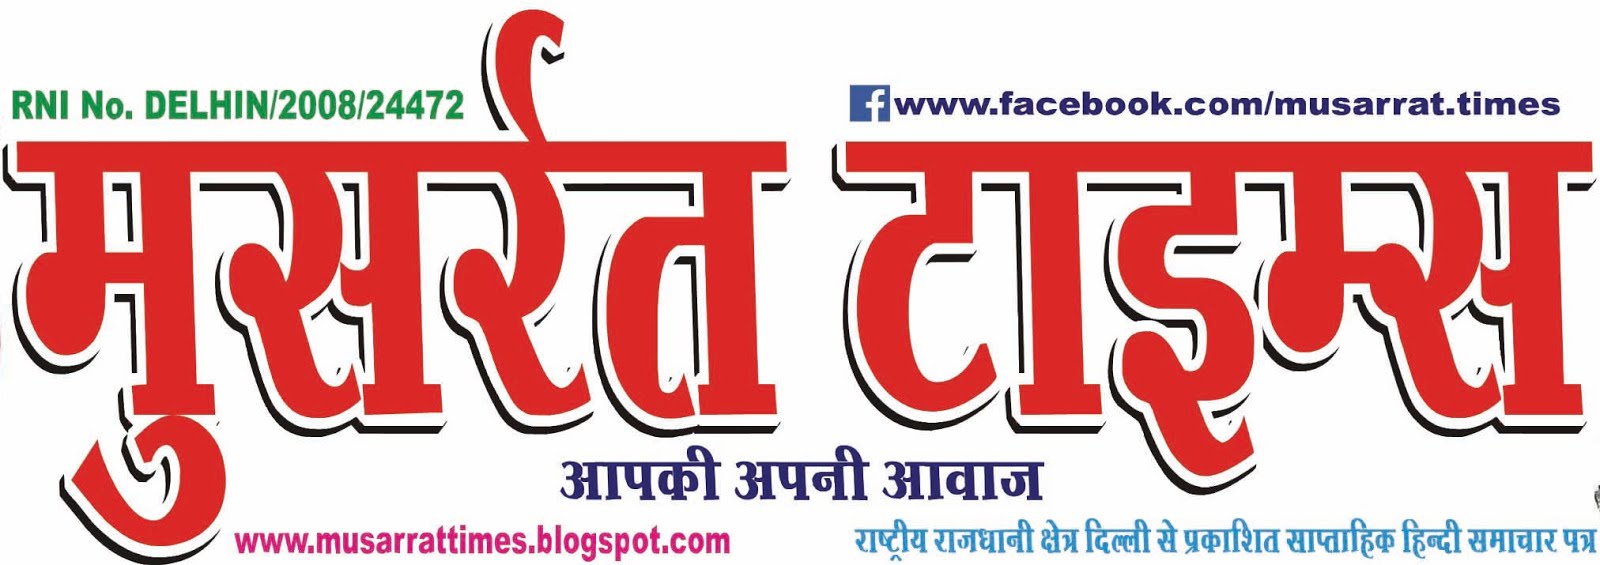 Musarrat Times Hindi News Pepar